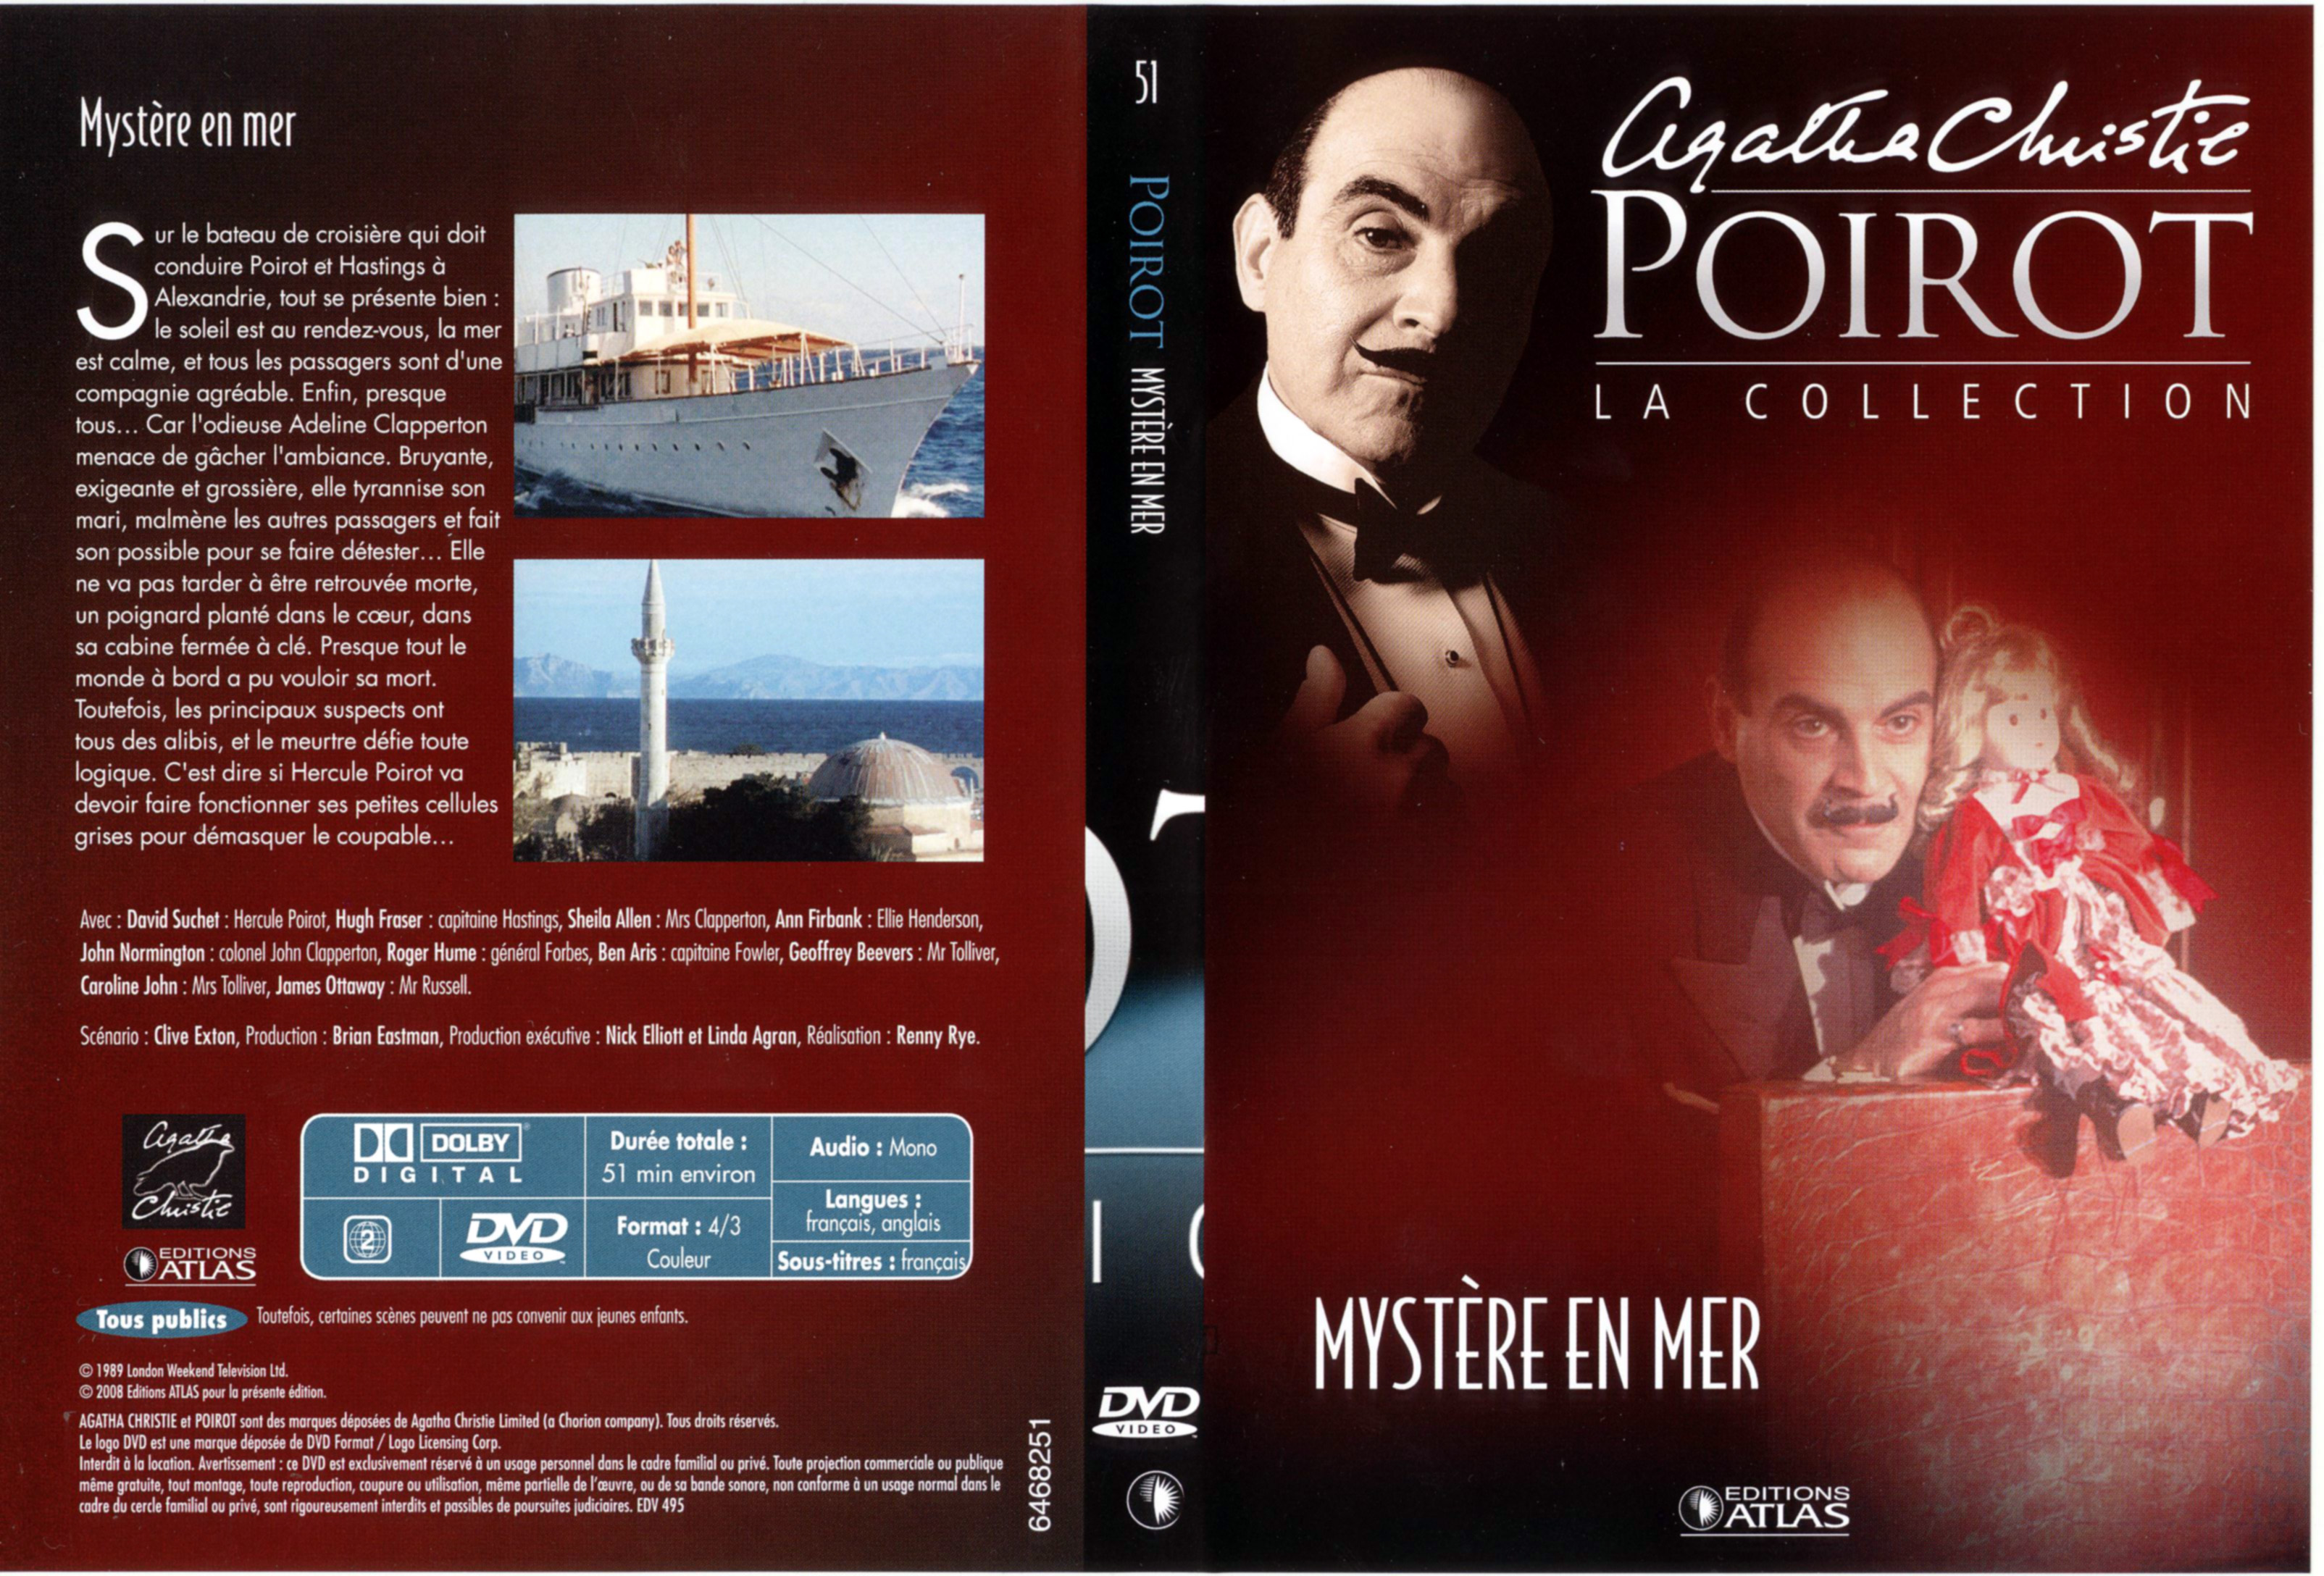 Jaquette DVD Hercule Poirot vol 51